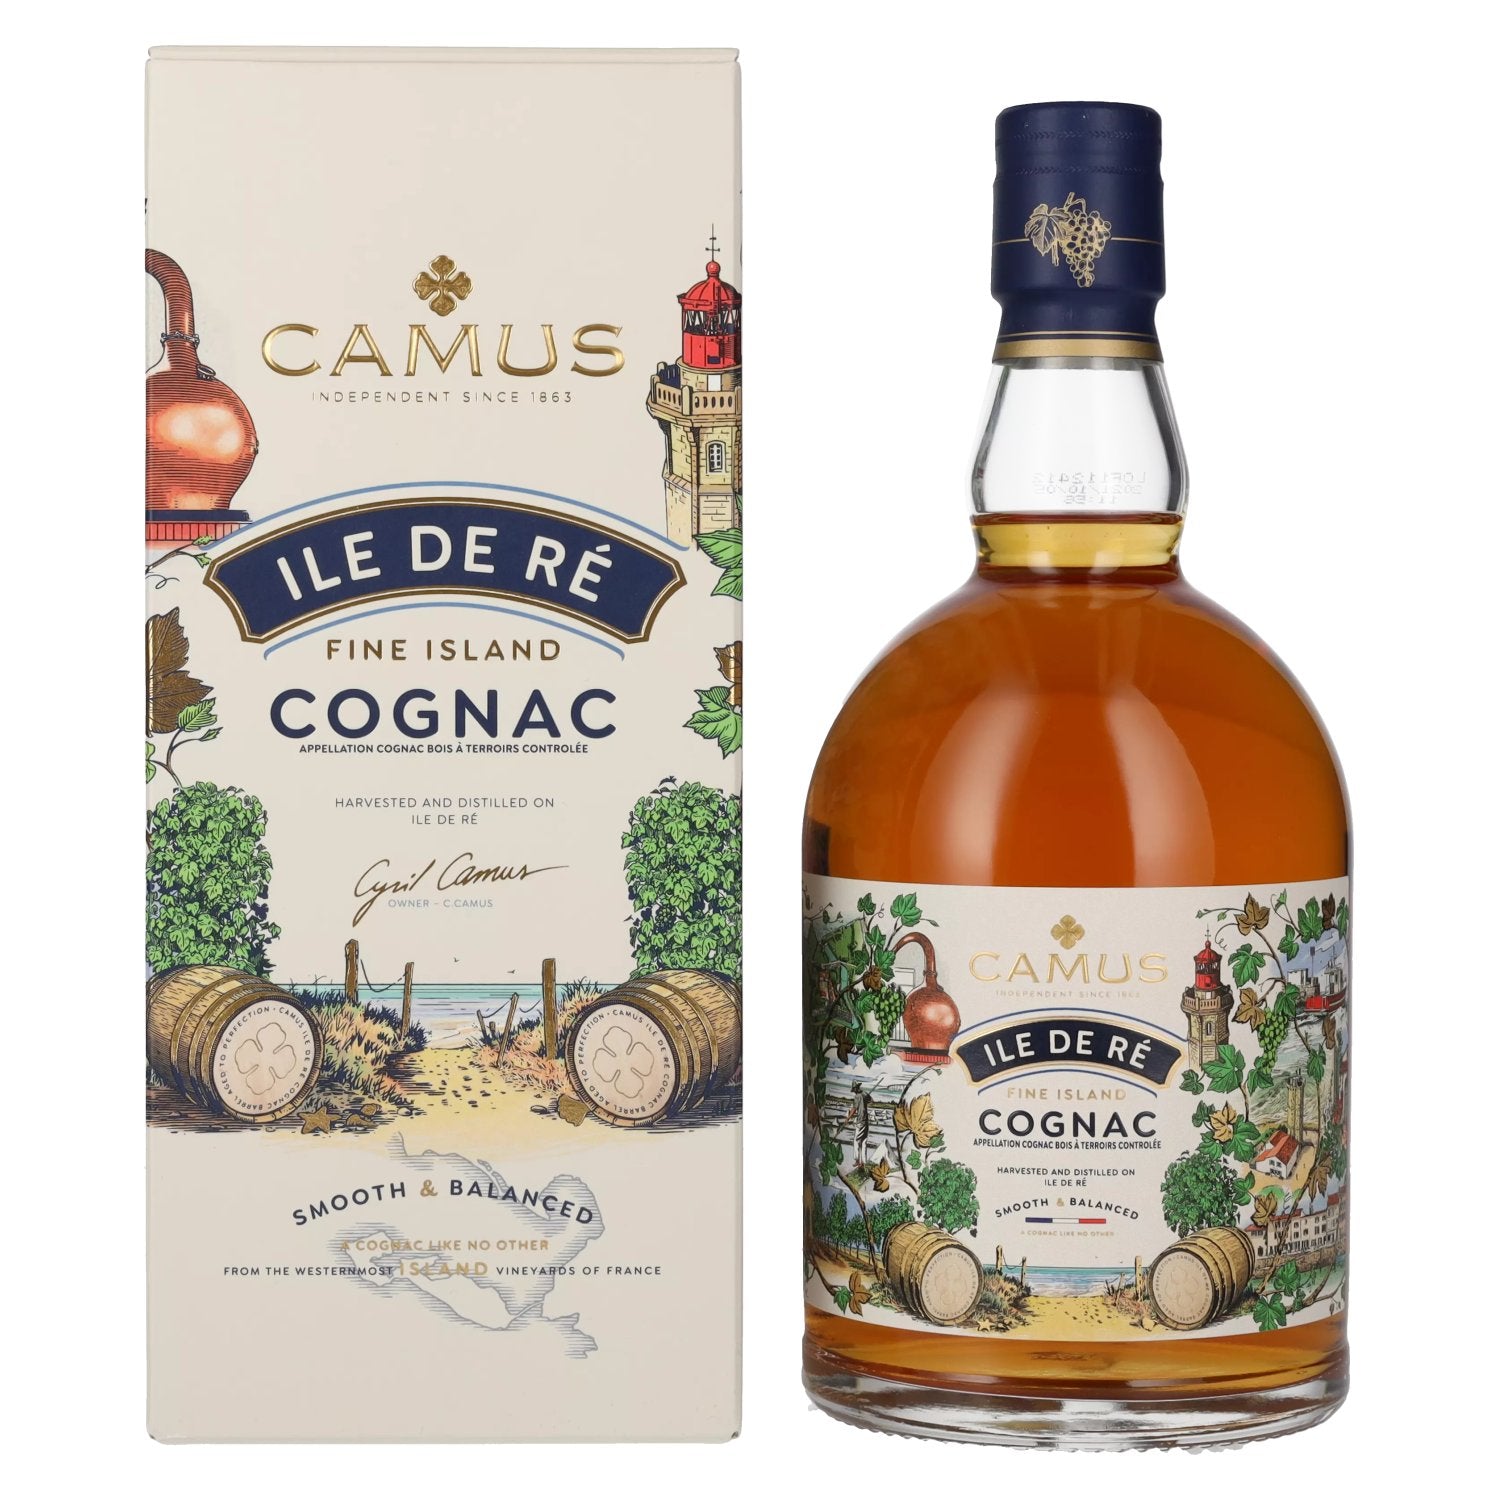 Camus ILE DE RE Fine Island Cognac 40% Vol. 0,7l in Giftbox